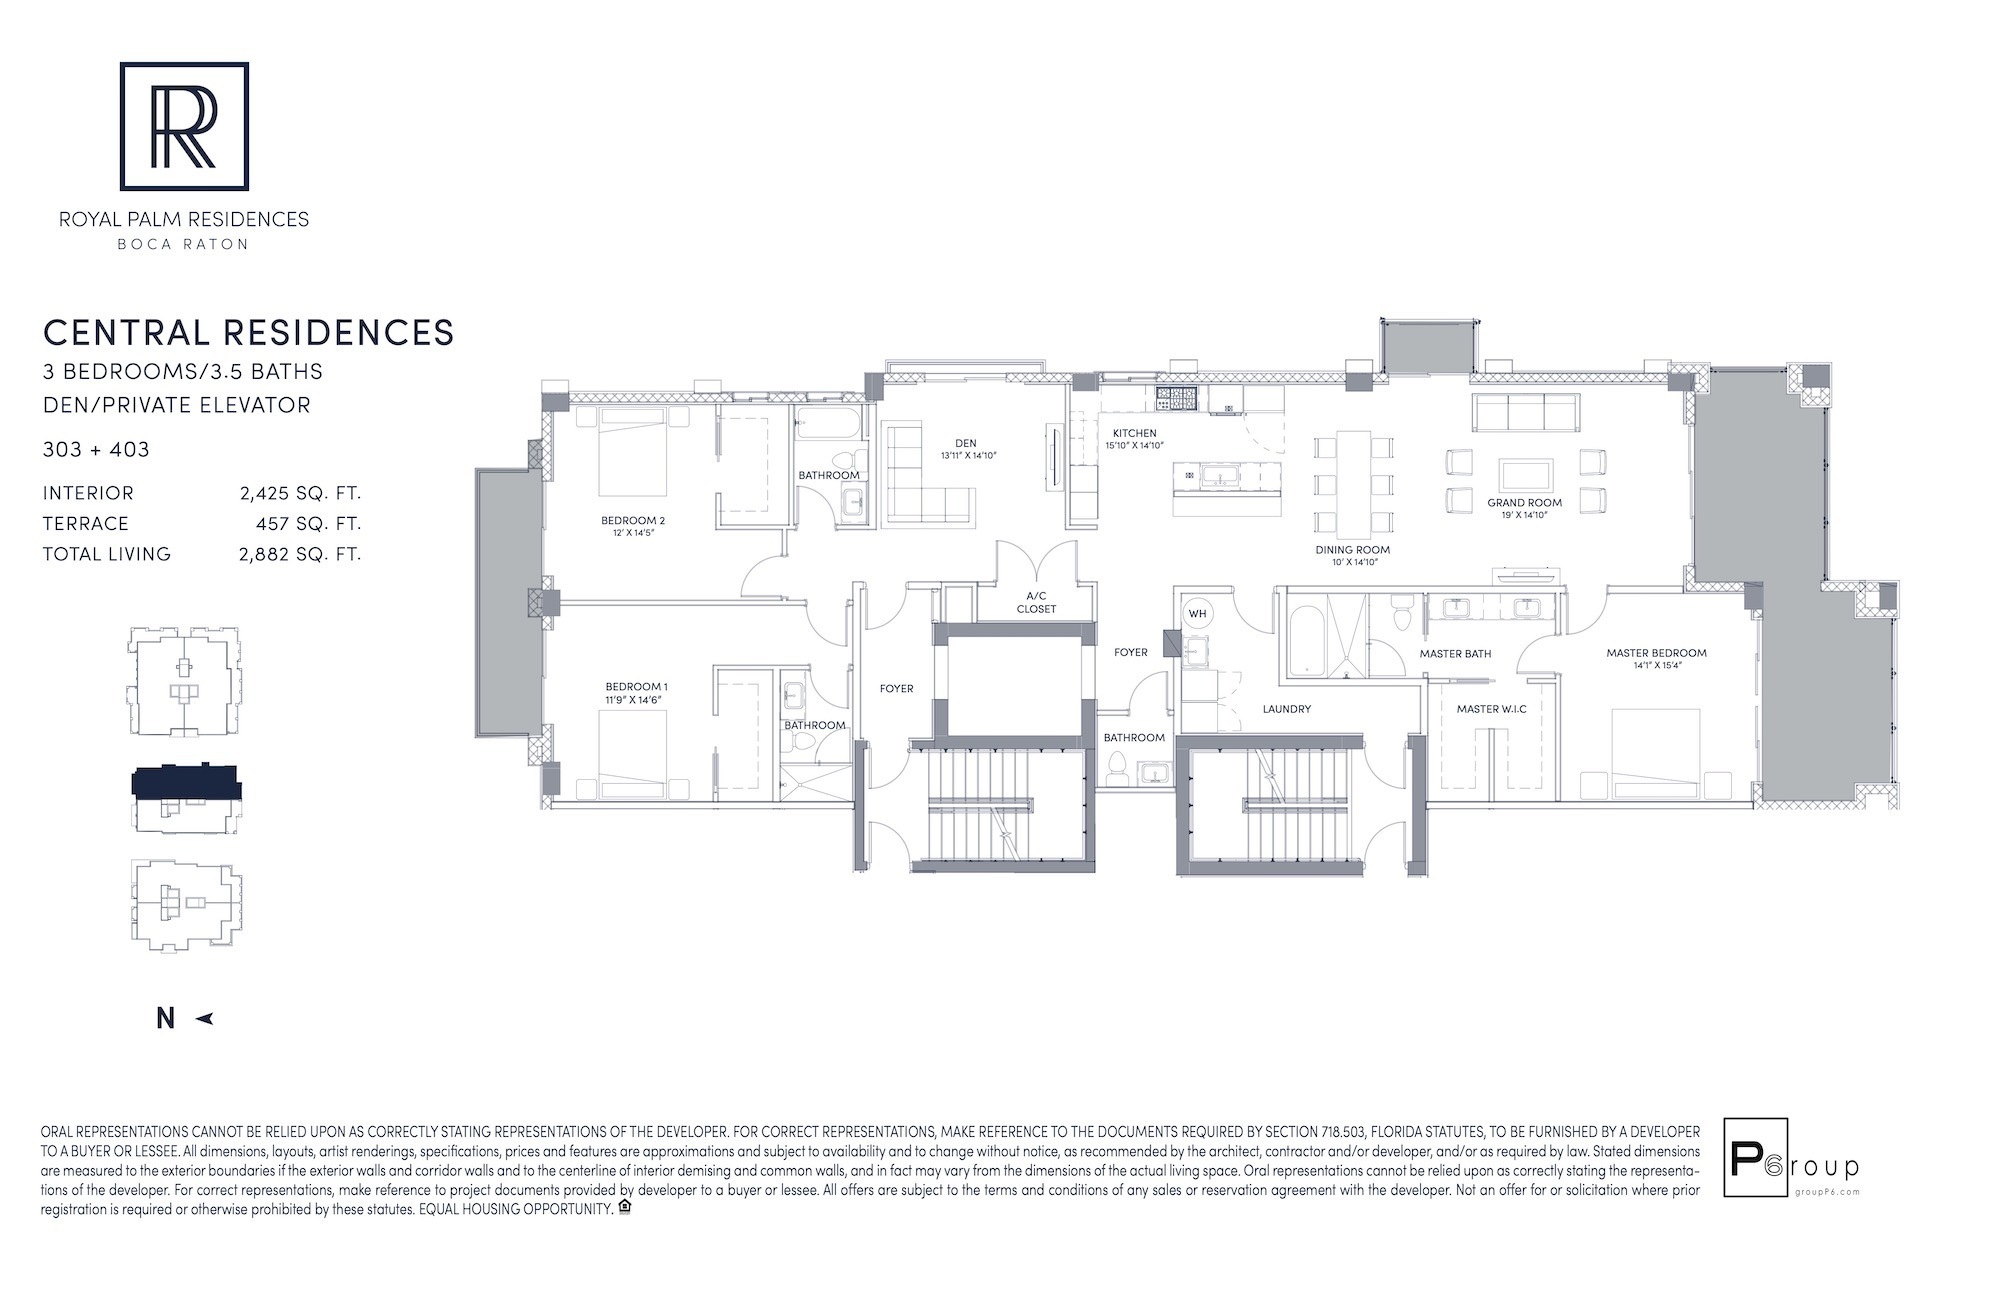 Floor Plan for Royal Palm Residences Floorplans, Central Residences 303 + 403